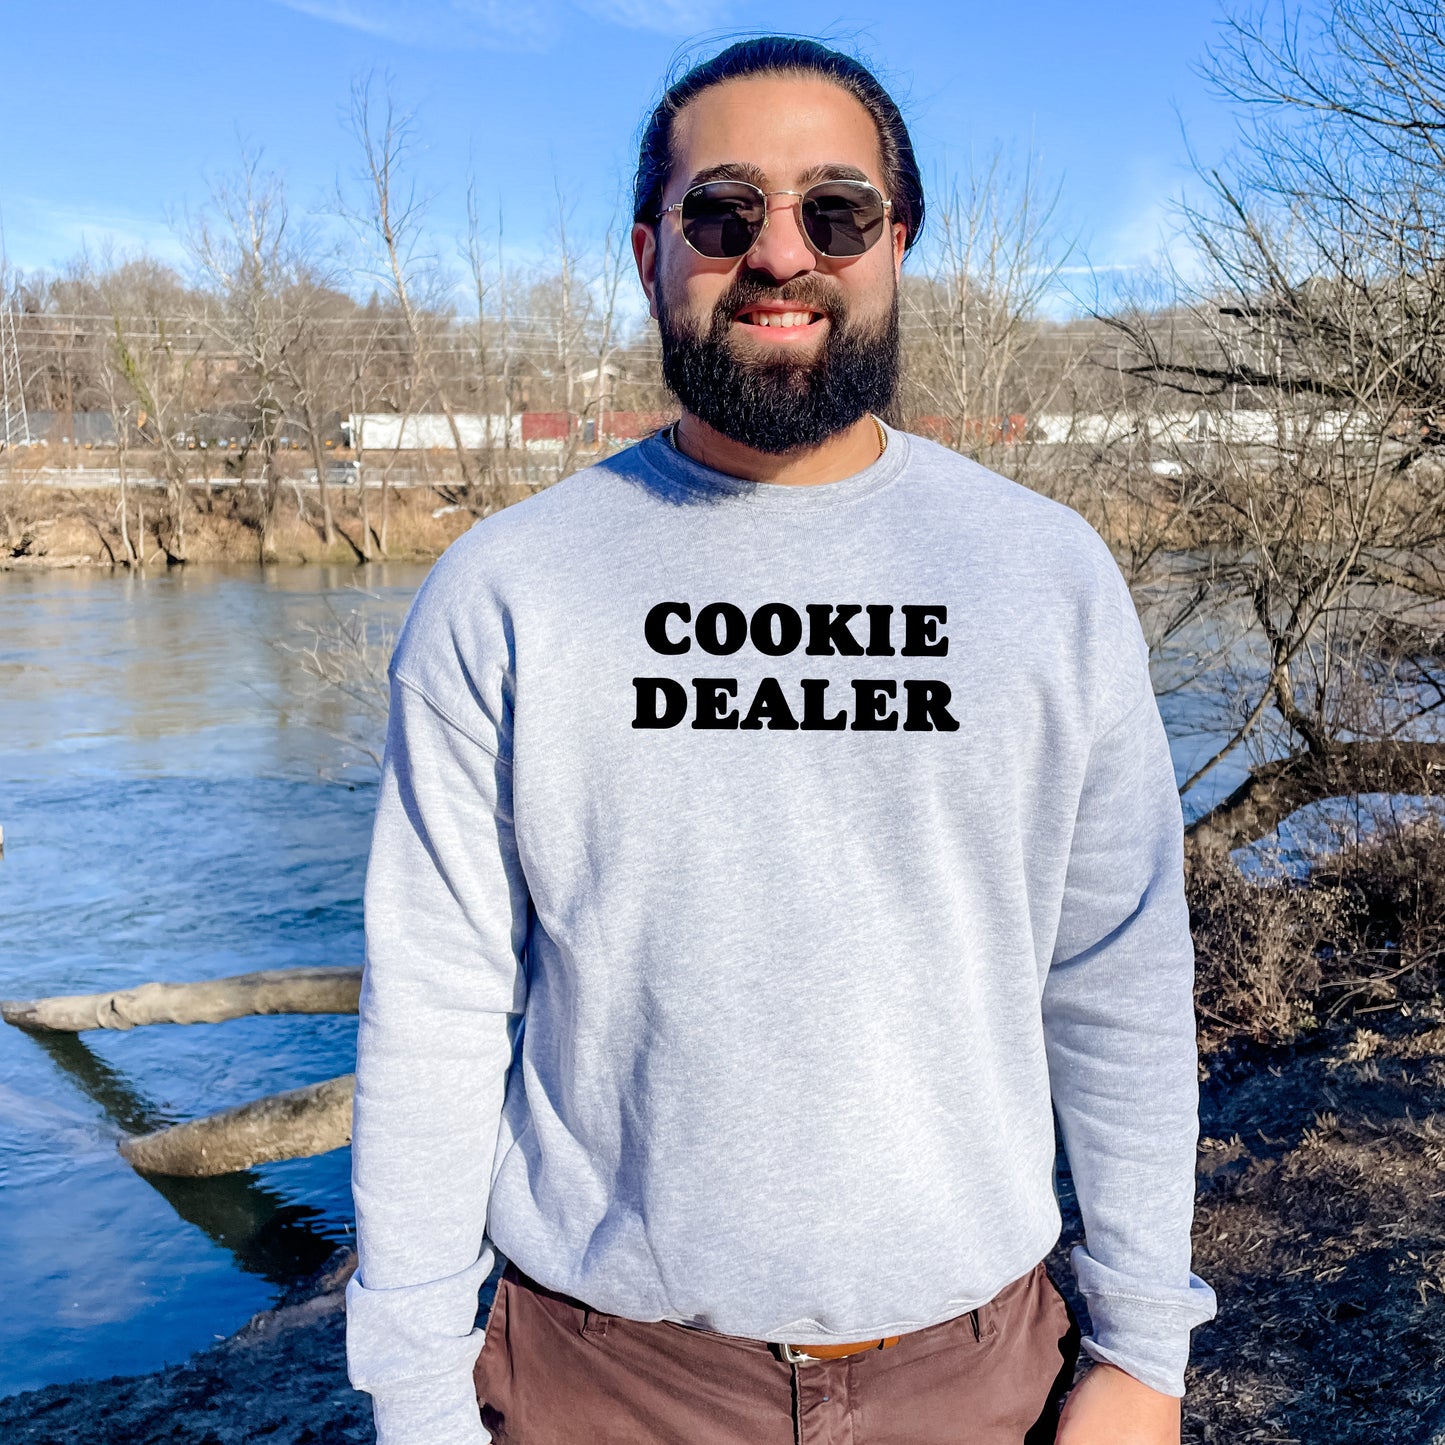 Cookie Dealer (Baking) - Unisex Sweatshirt - Heather Gray or Dusty Blue